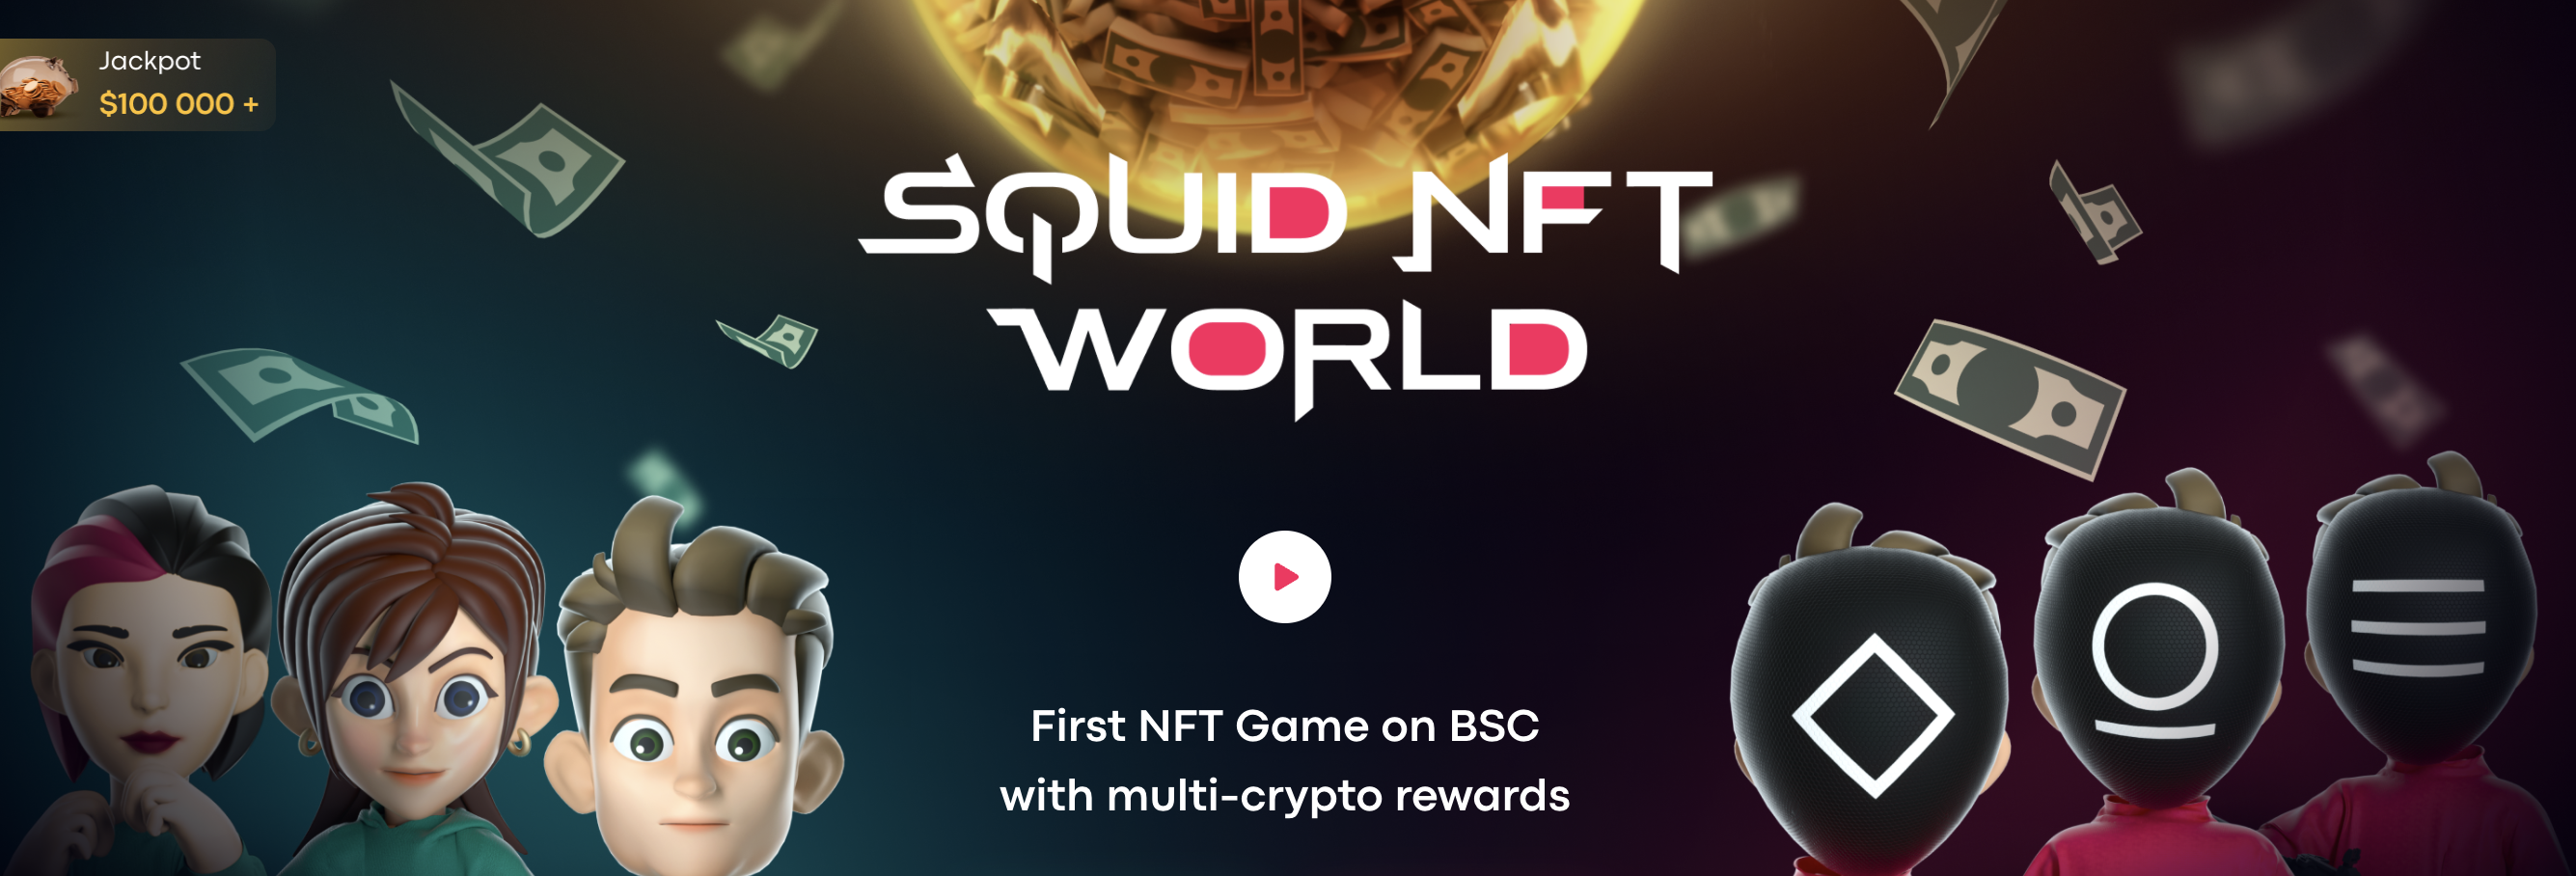 Squid NFT World, a blockchain based GameFi derivative of the Netflix show Squid Game